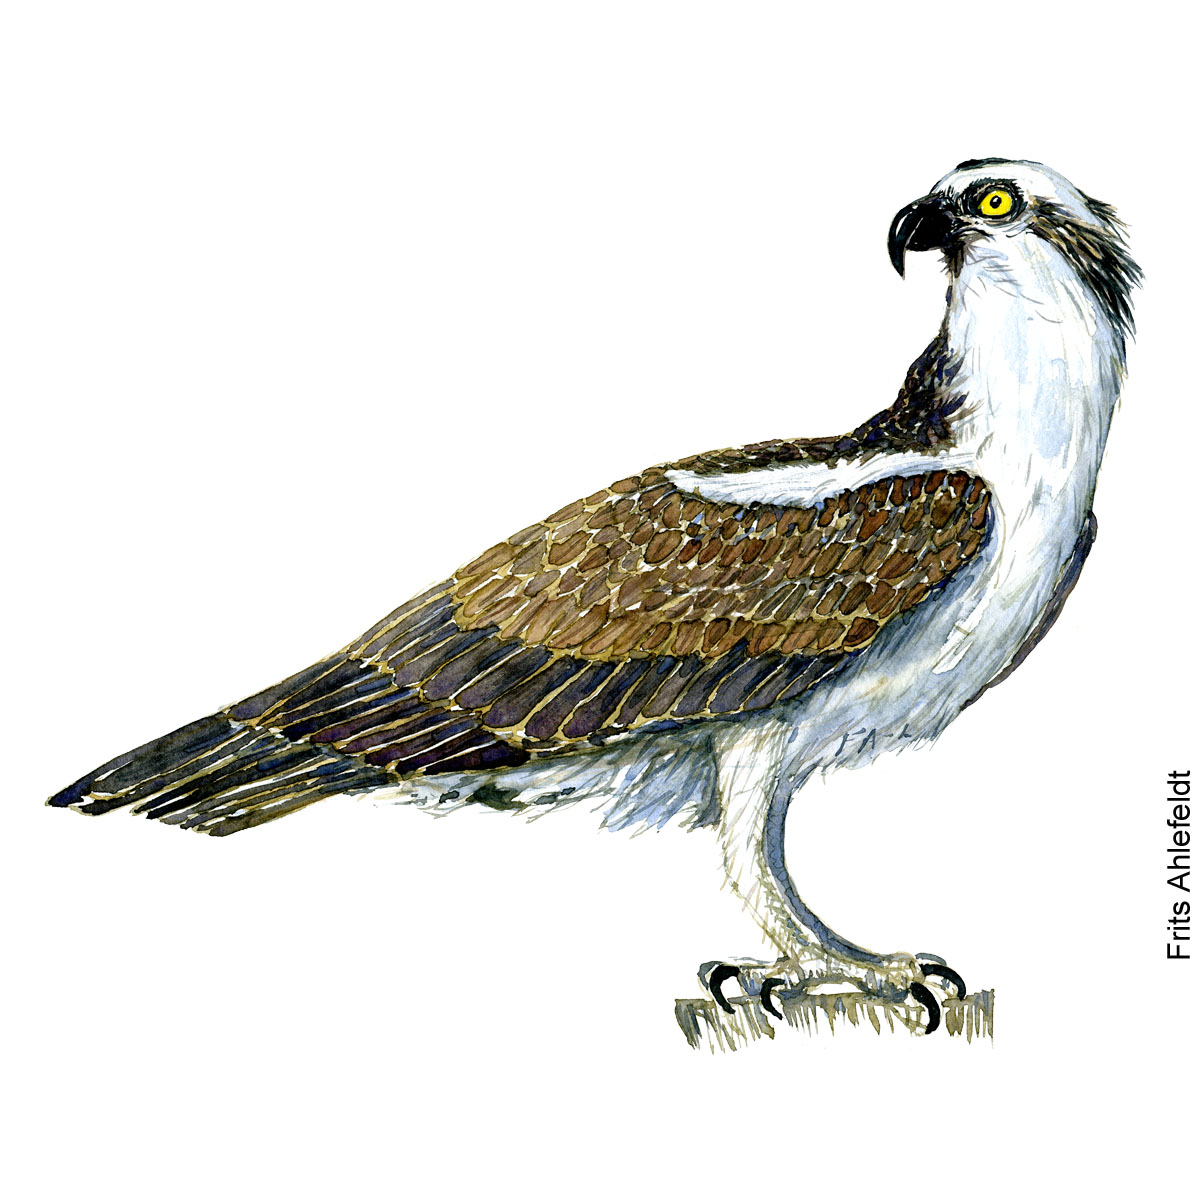 Fiskeoern - Osprey eagle bird watercolor painting. Artwork by Frits Ahlefeldt. Fugle akvarel